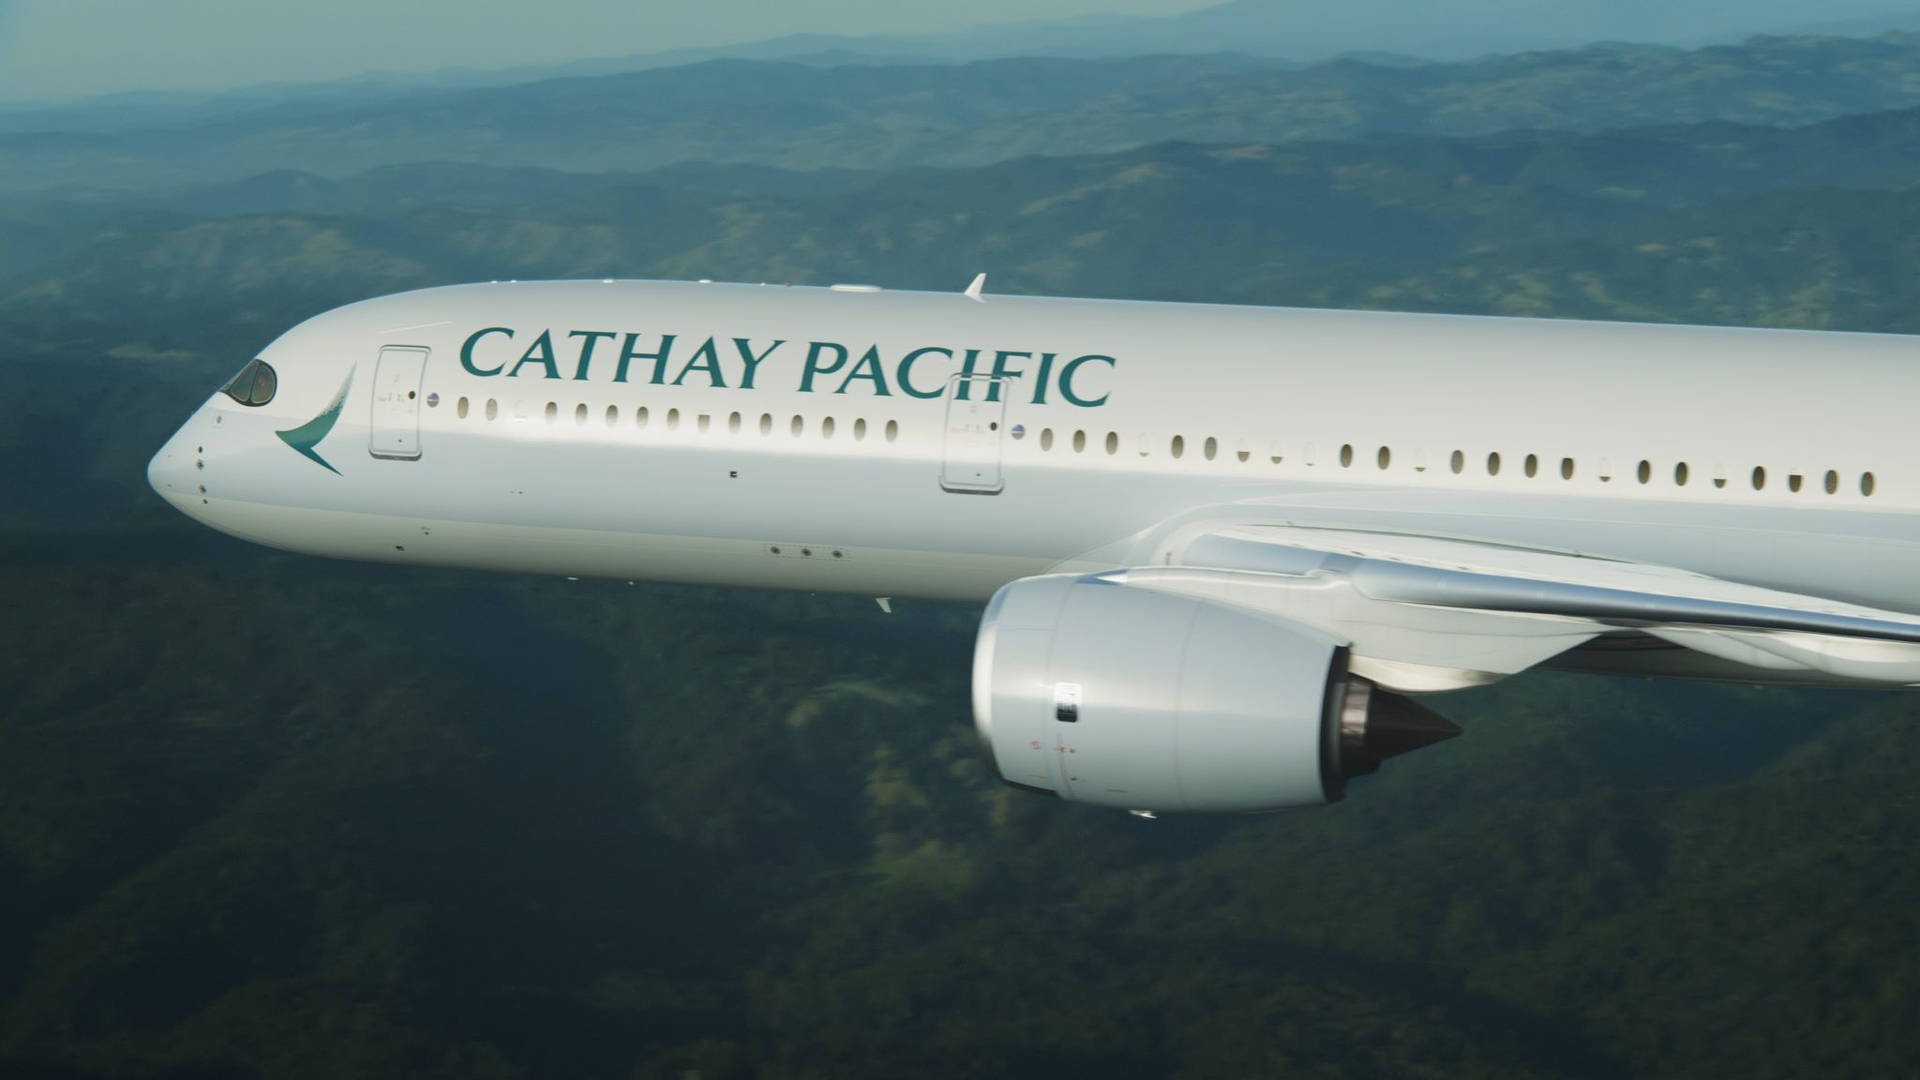 Cathaypacific Mountain View (vista De La Montaña De Cathay Pacific) Fondo de pantalla